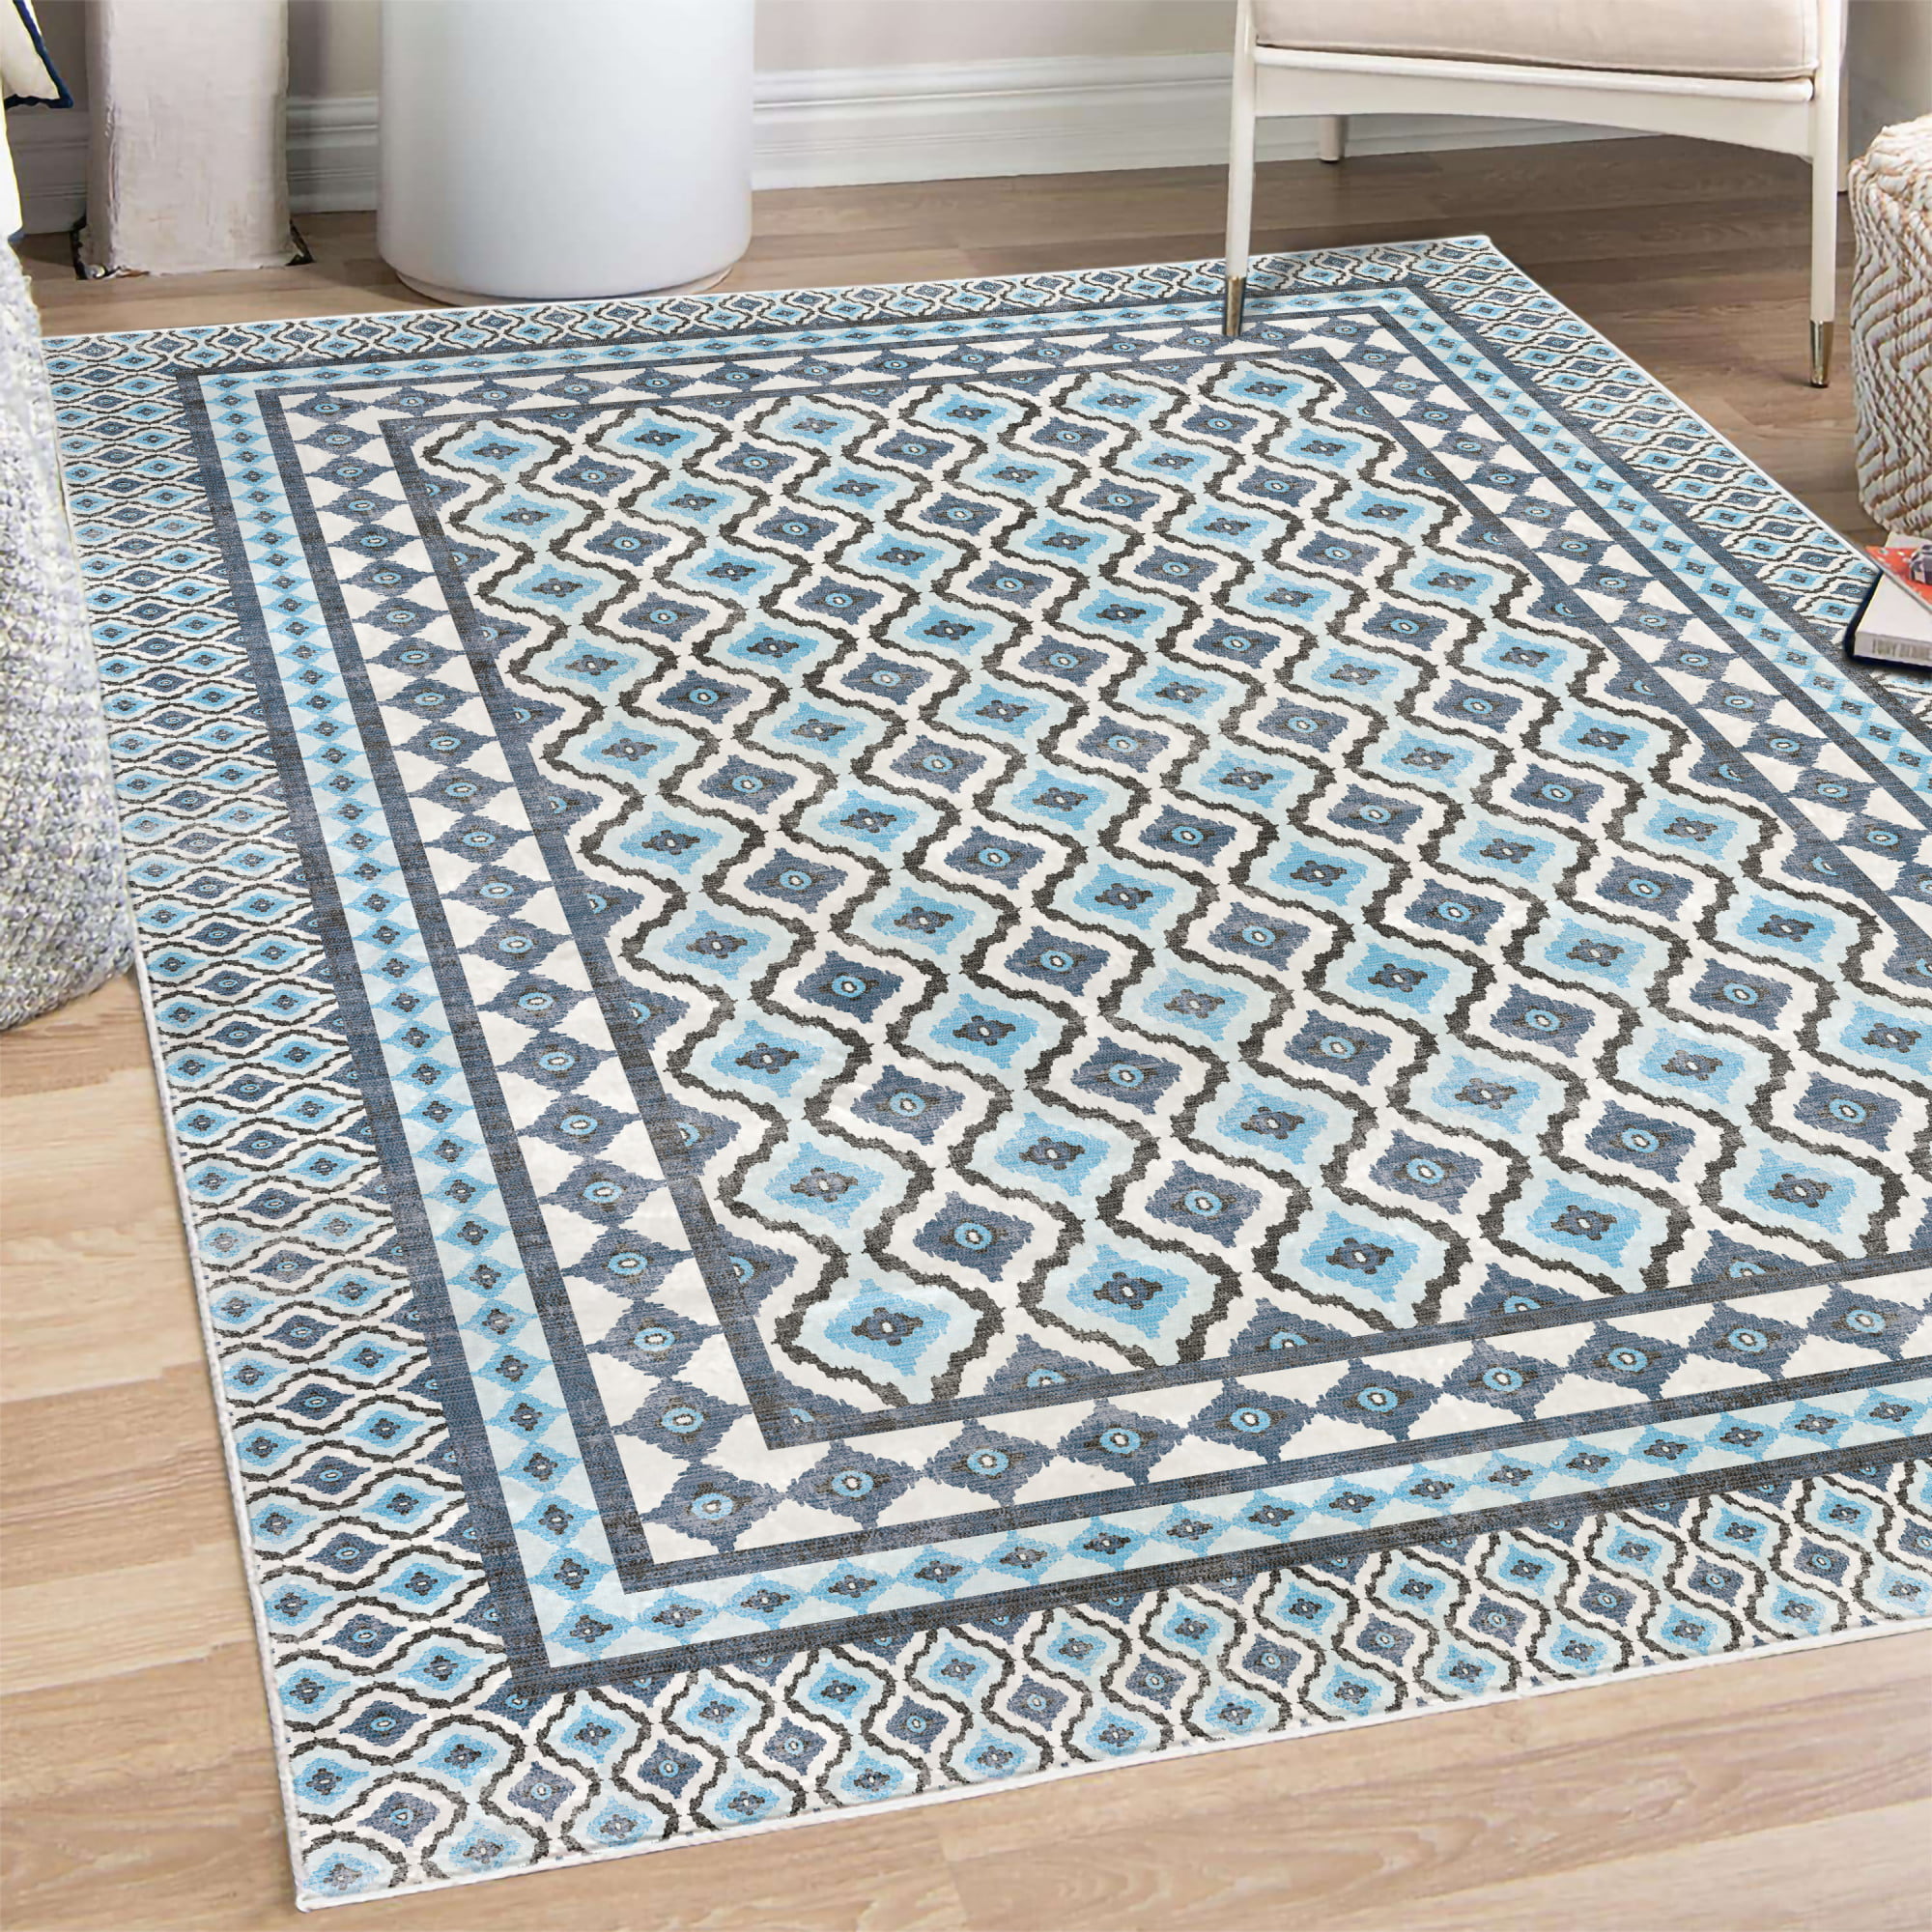 Traditional Rug Grey Silver Oriental Pattern Ornament Carpet Room Floor Mats 